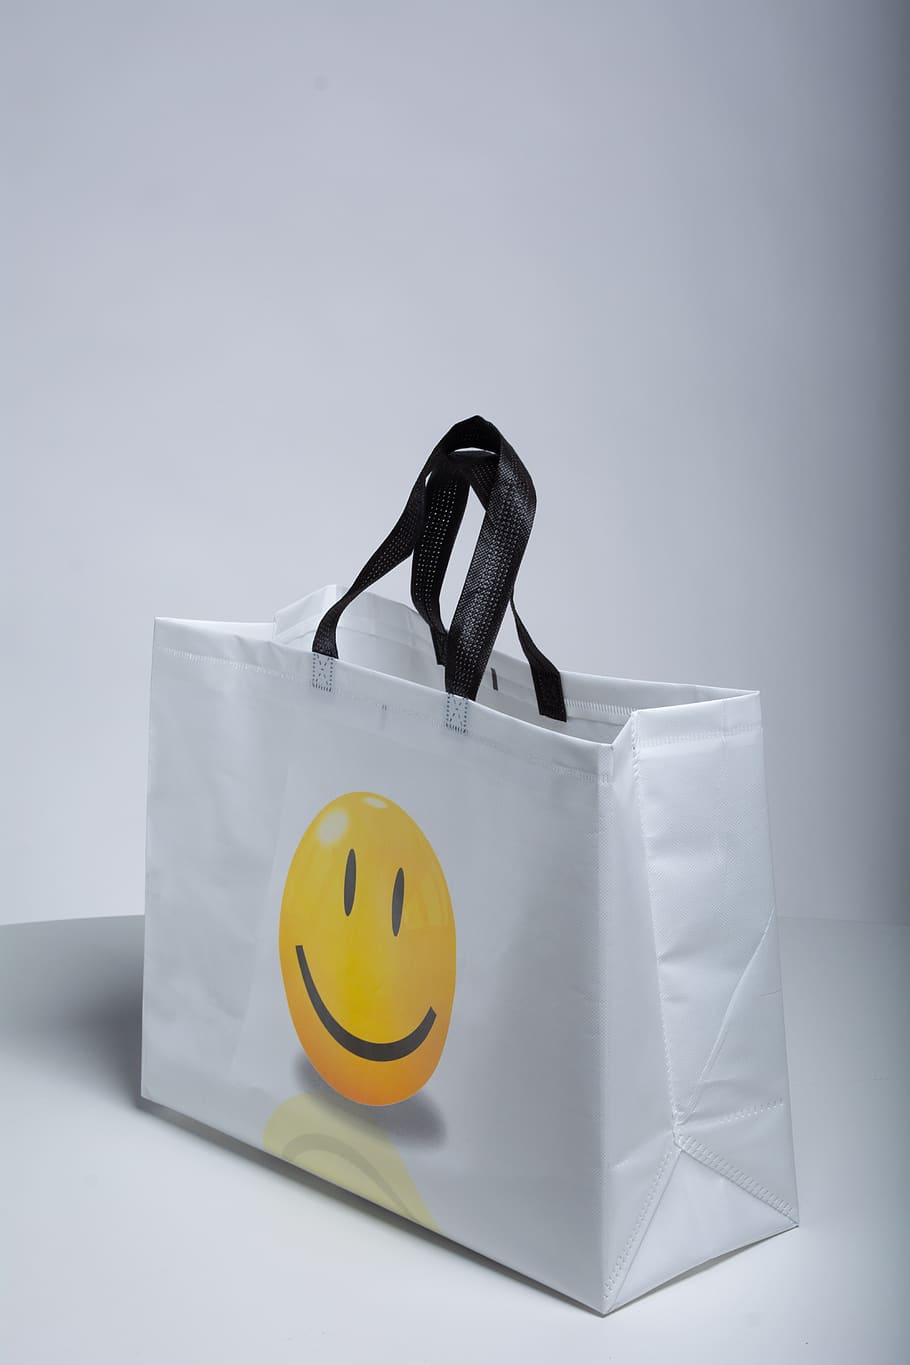 Download Hd Wallpaper Non Woven Bags Eco Friendly Bags Polypropylene Bags Shopping Bags Wallpaper Flare